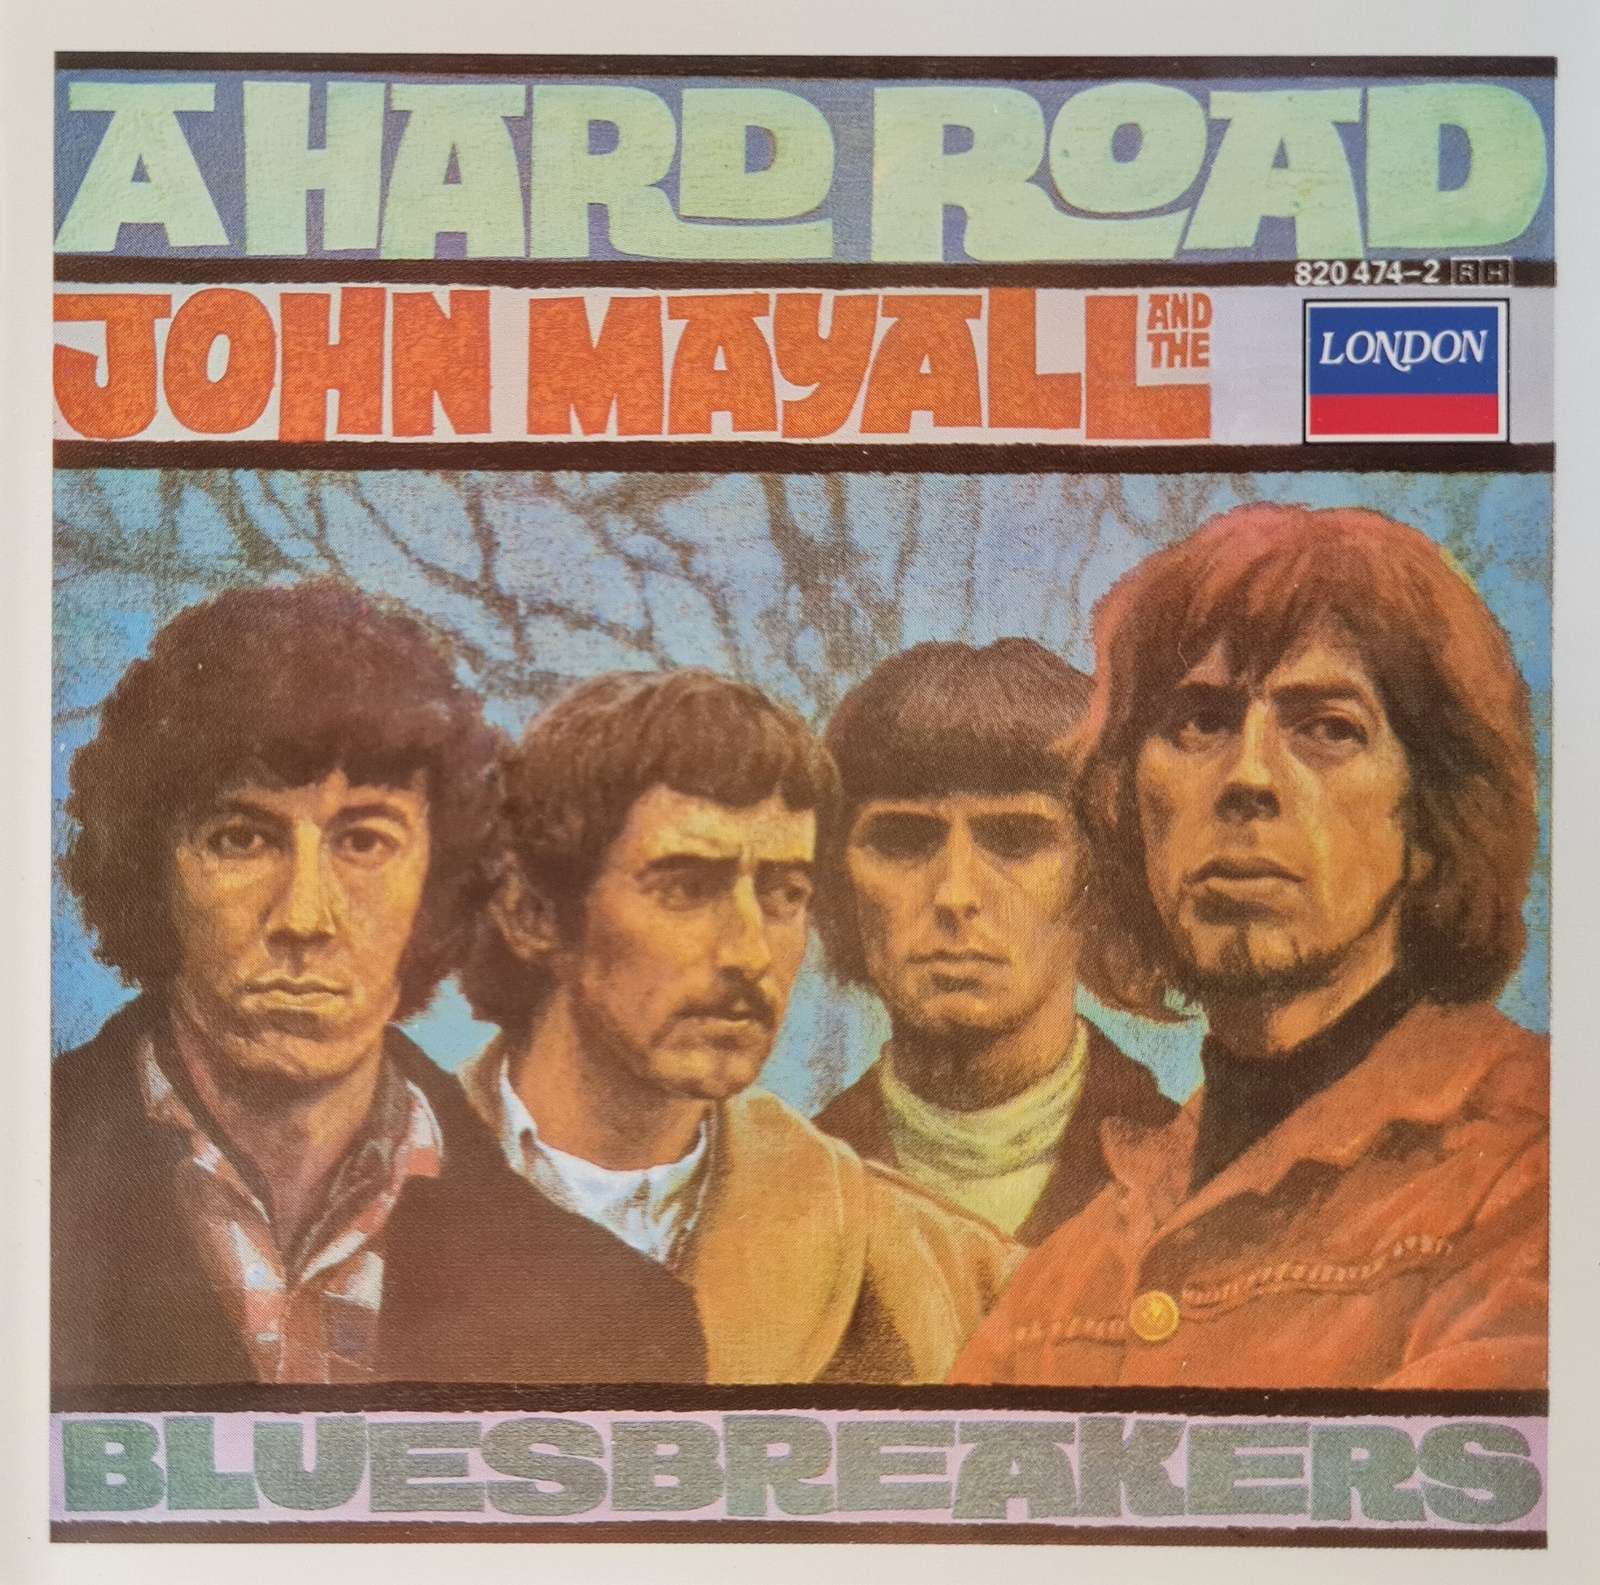 John Mayall and the Bluesbreakers - A Hard Road (CD)